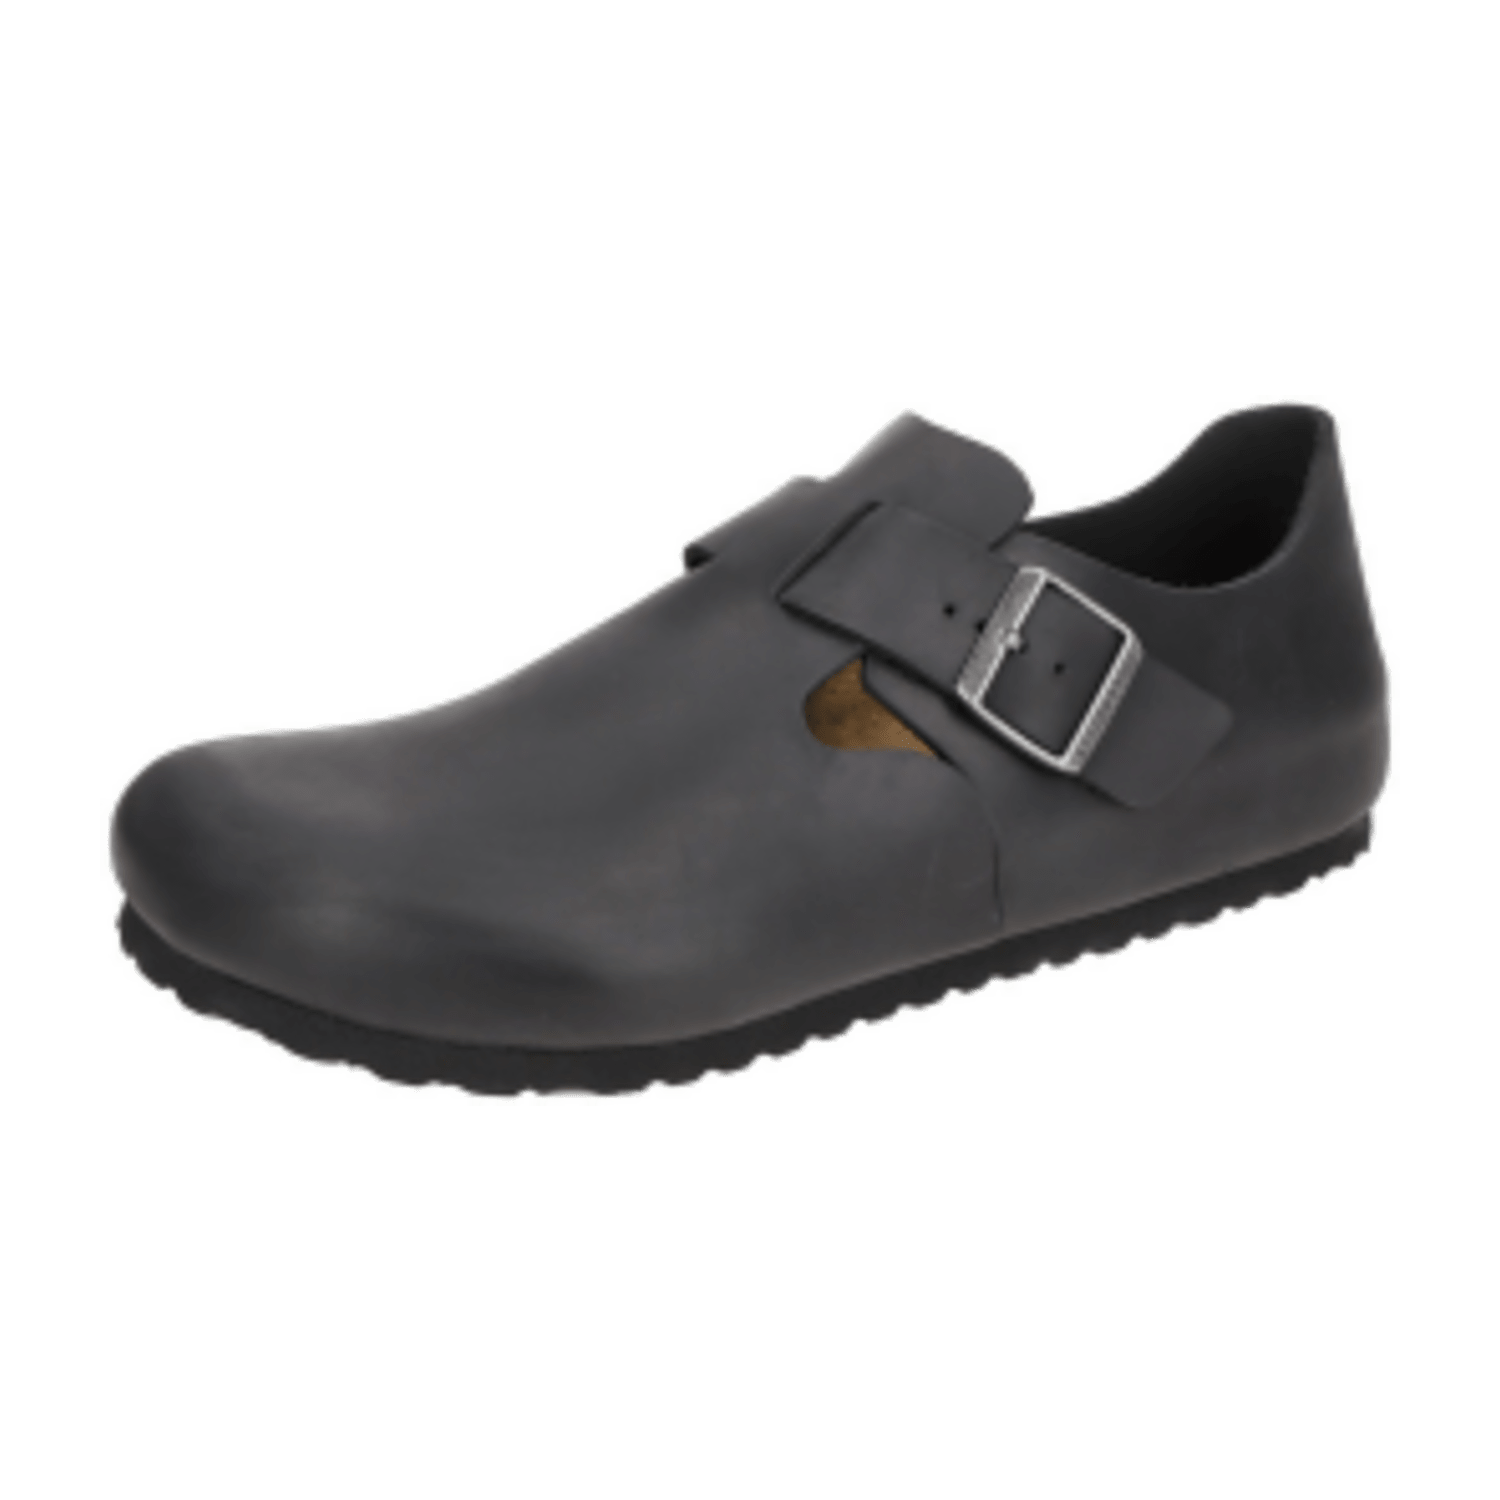 Birkenstock London BS Schuhe schwarz Normal-Weit 166541